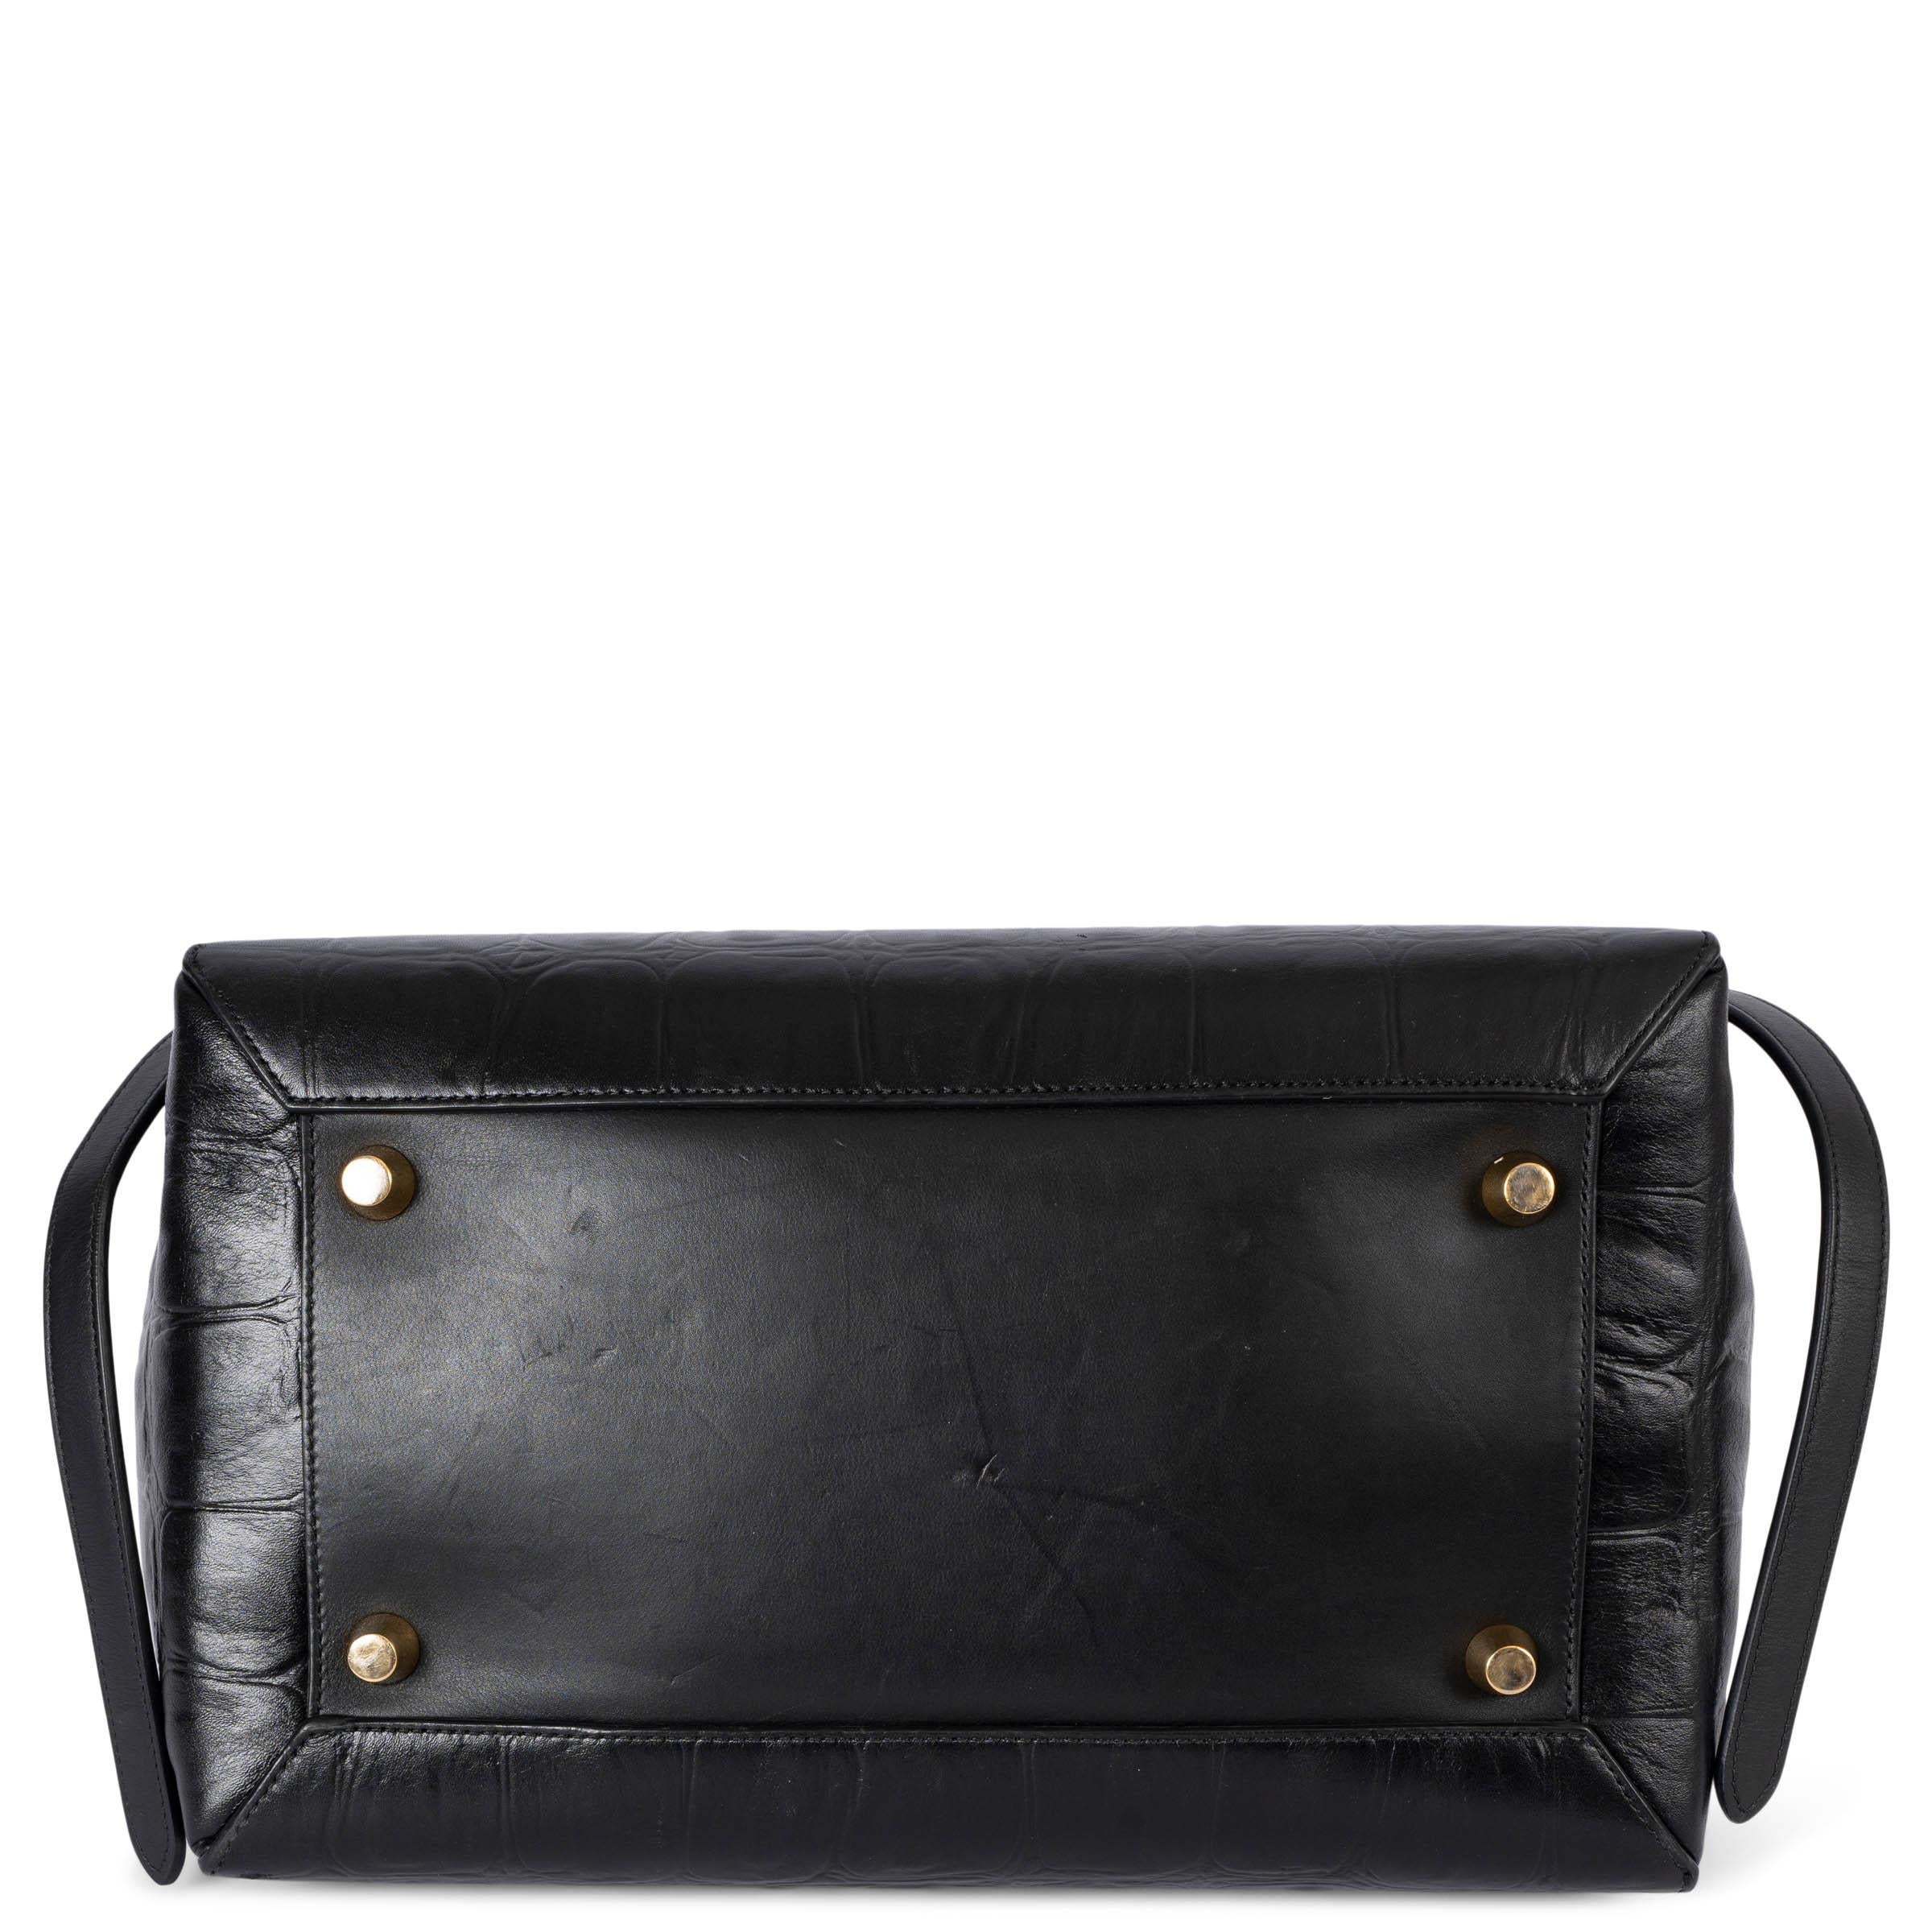 Women's CELINE black leather 2015 CROC EMBOSSED SMALL BELT Bag For Sale